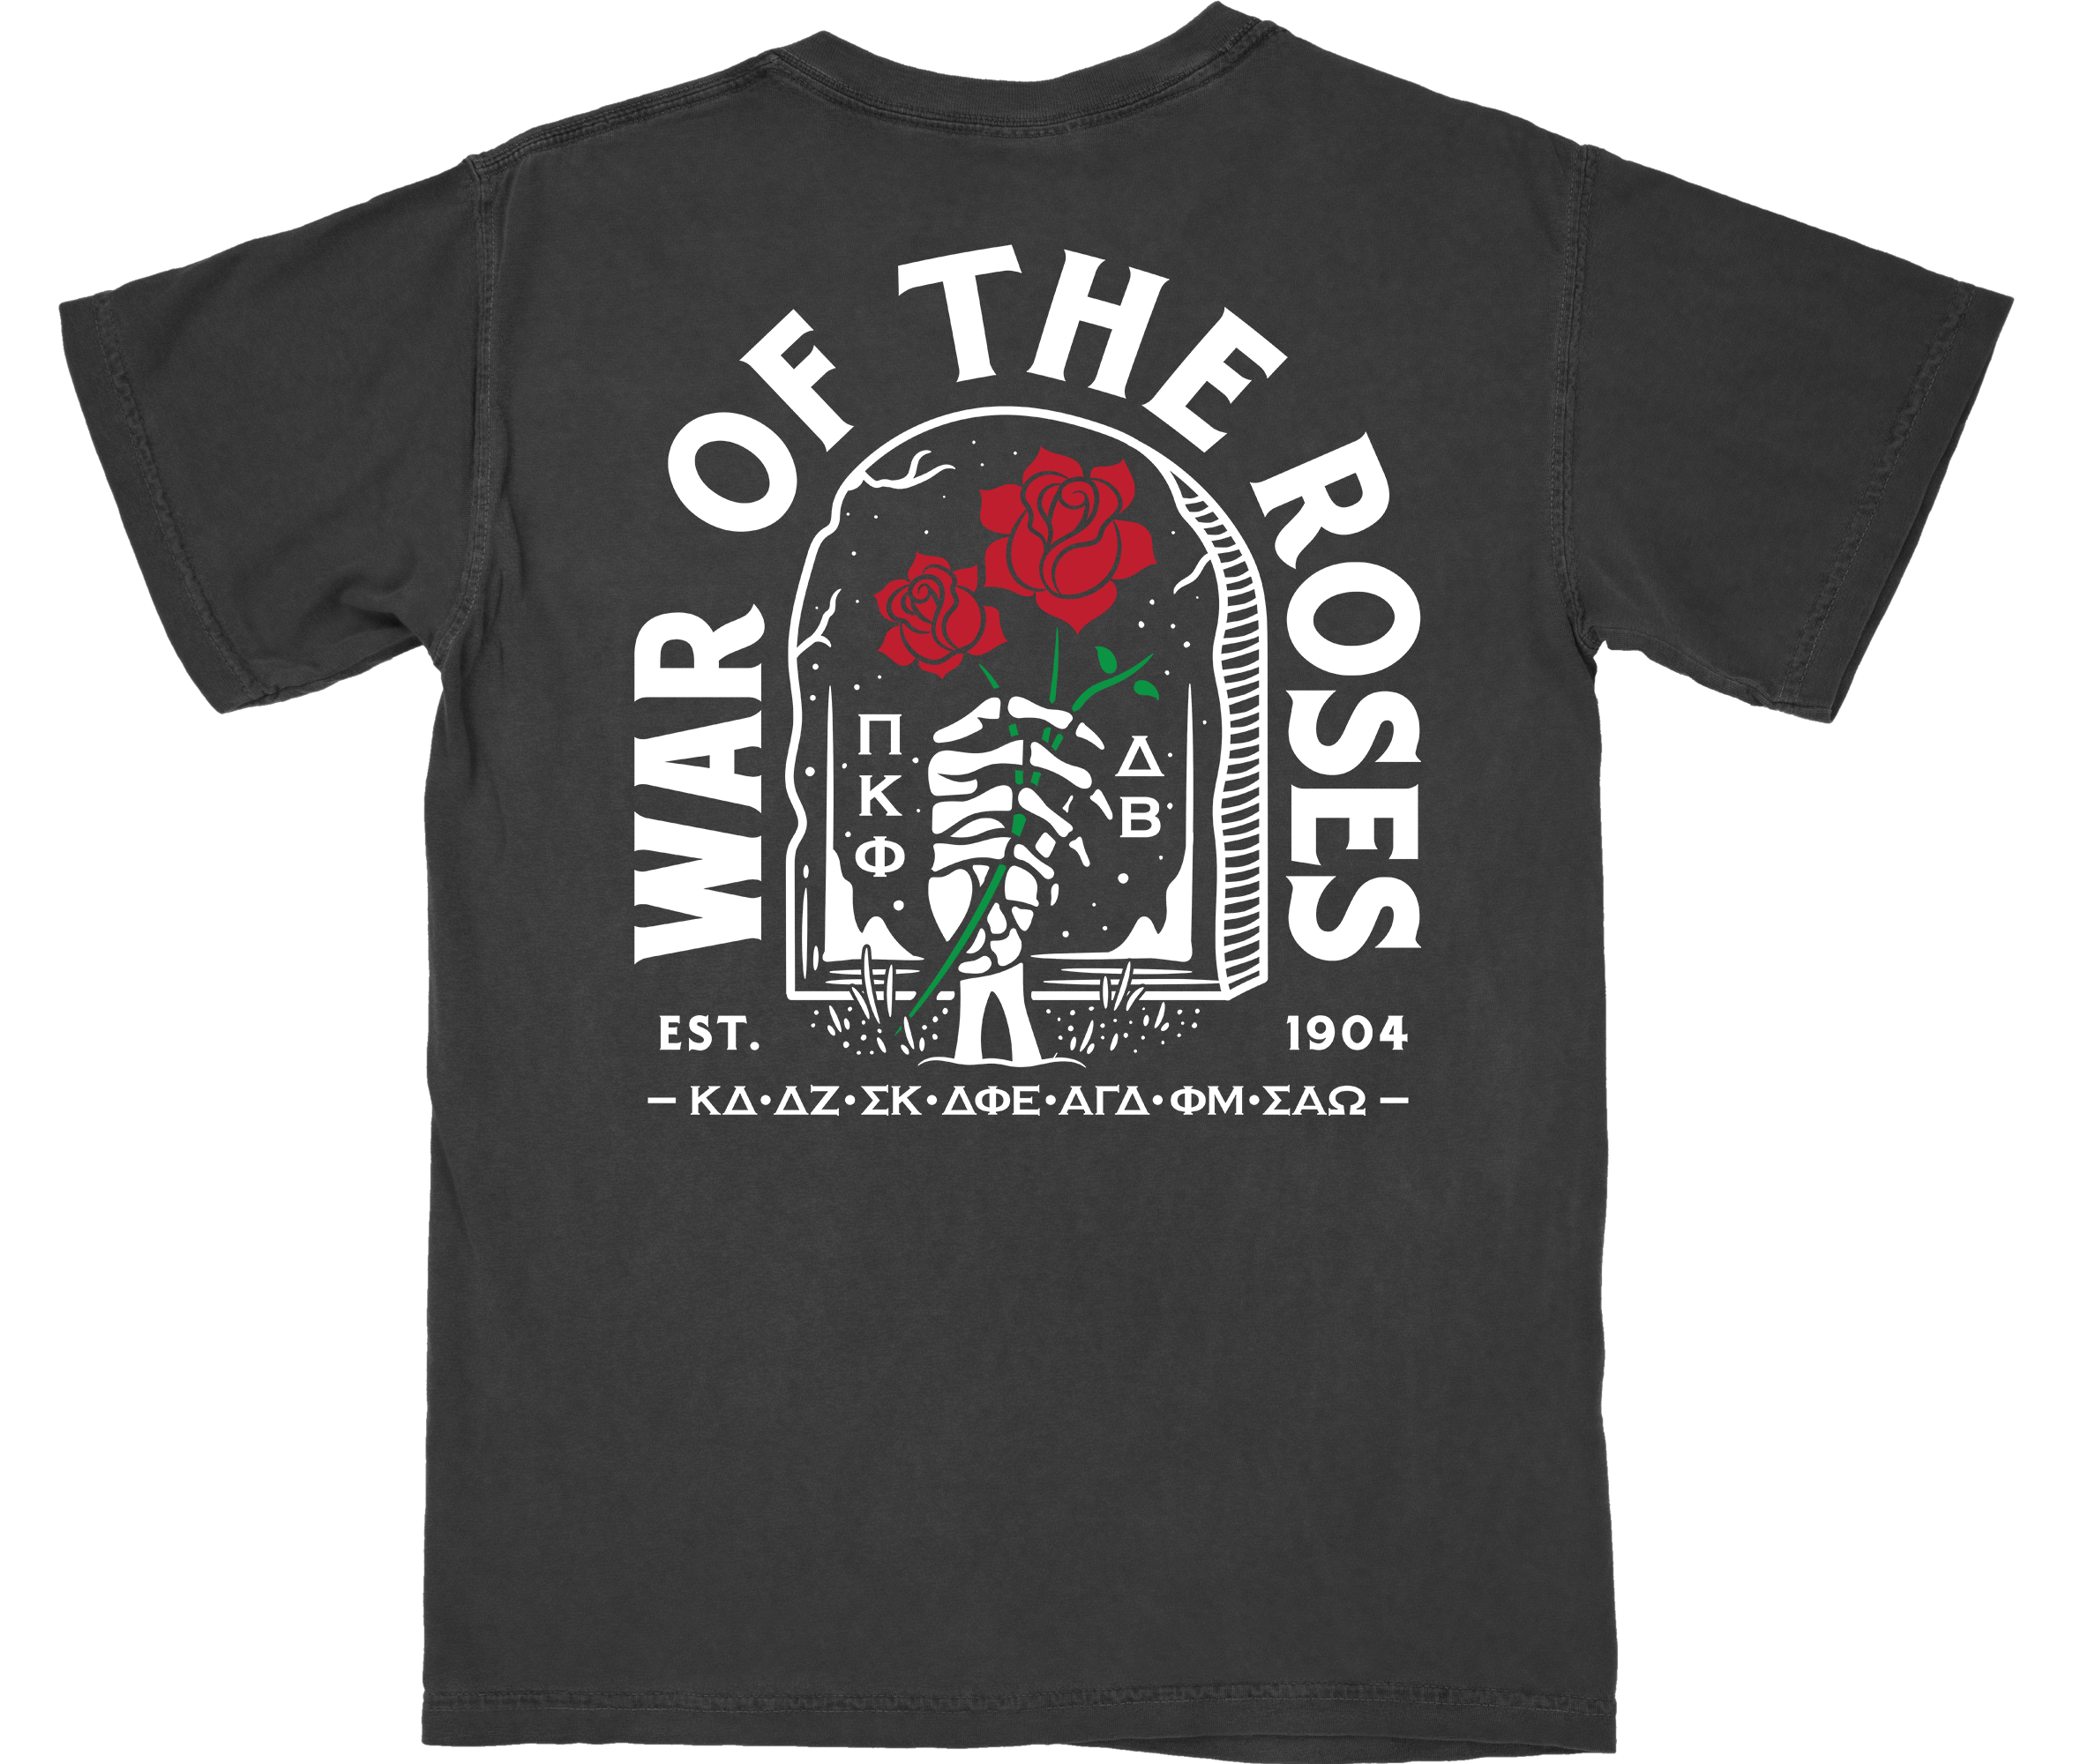 War of the Roses Shirt